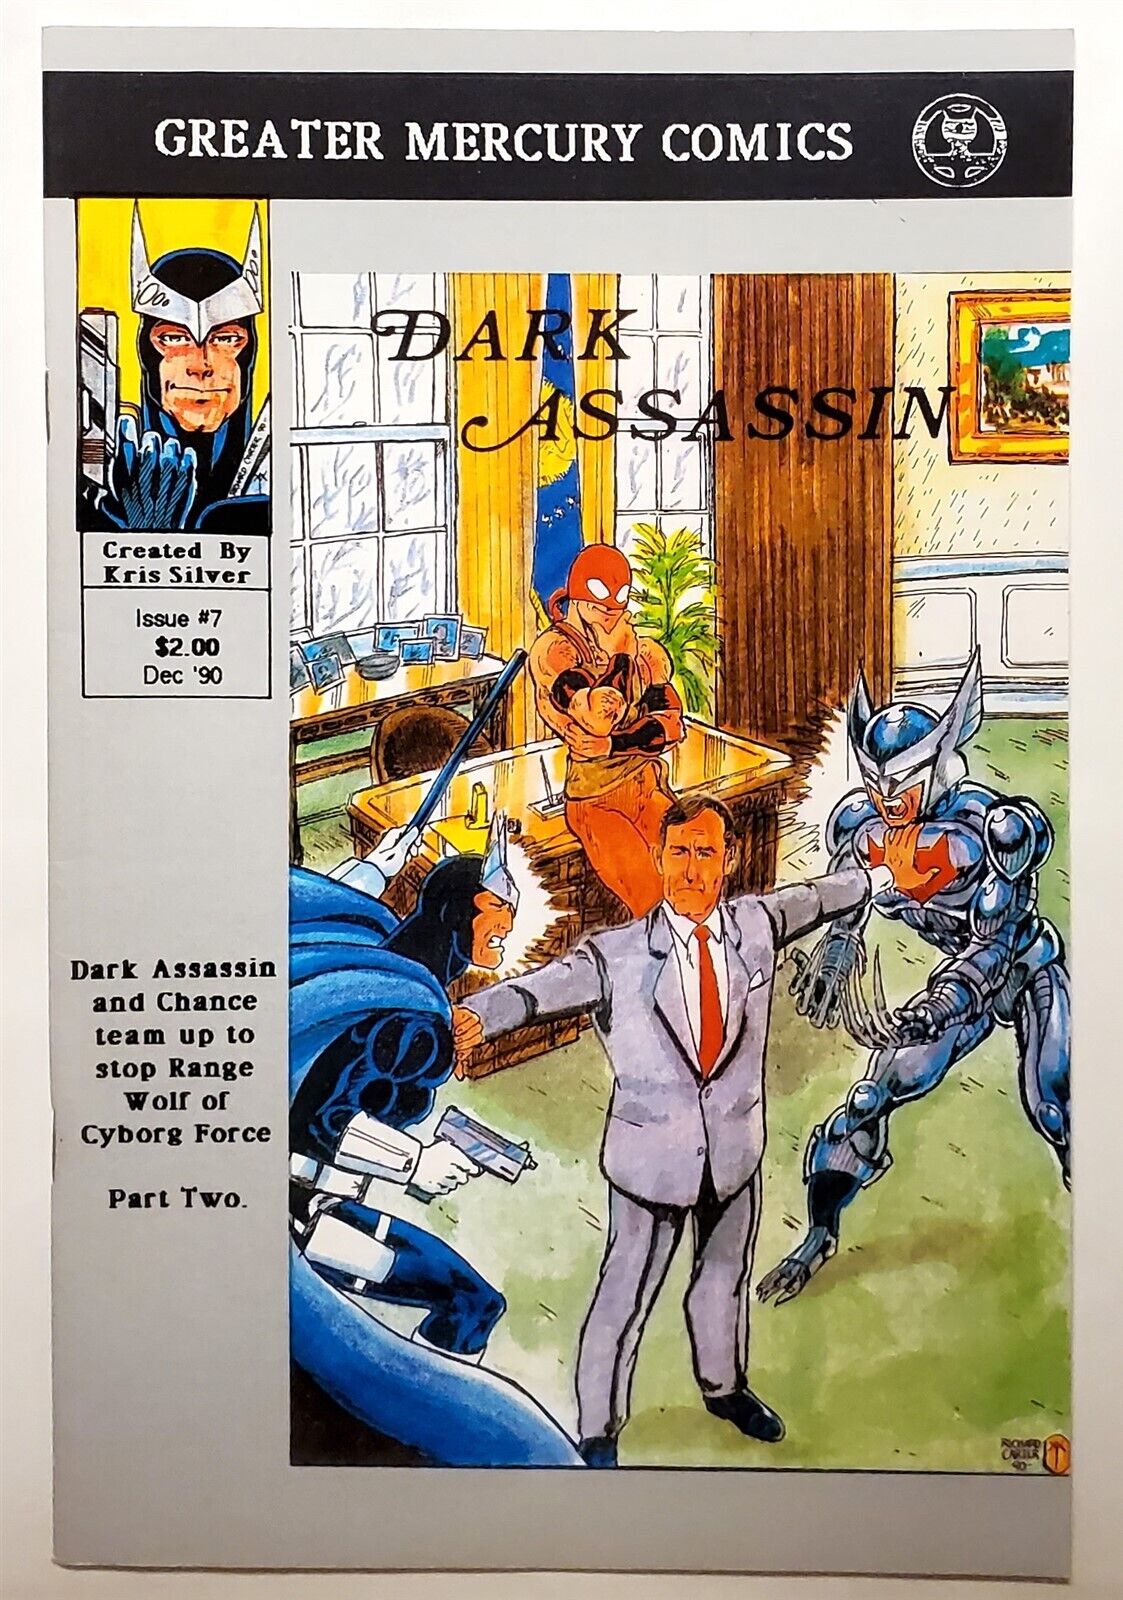 Dark Assassin Vol. 2 #7 (Dec 1990, Greater Mercury) 6.5 FN+ 